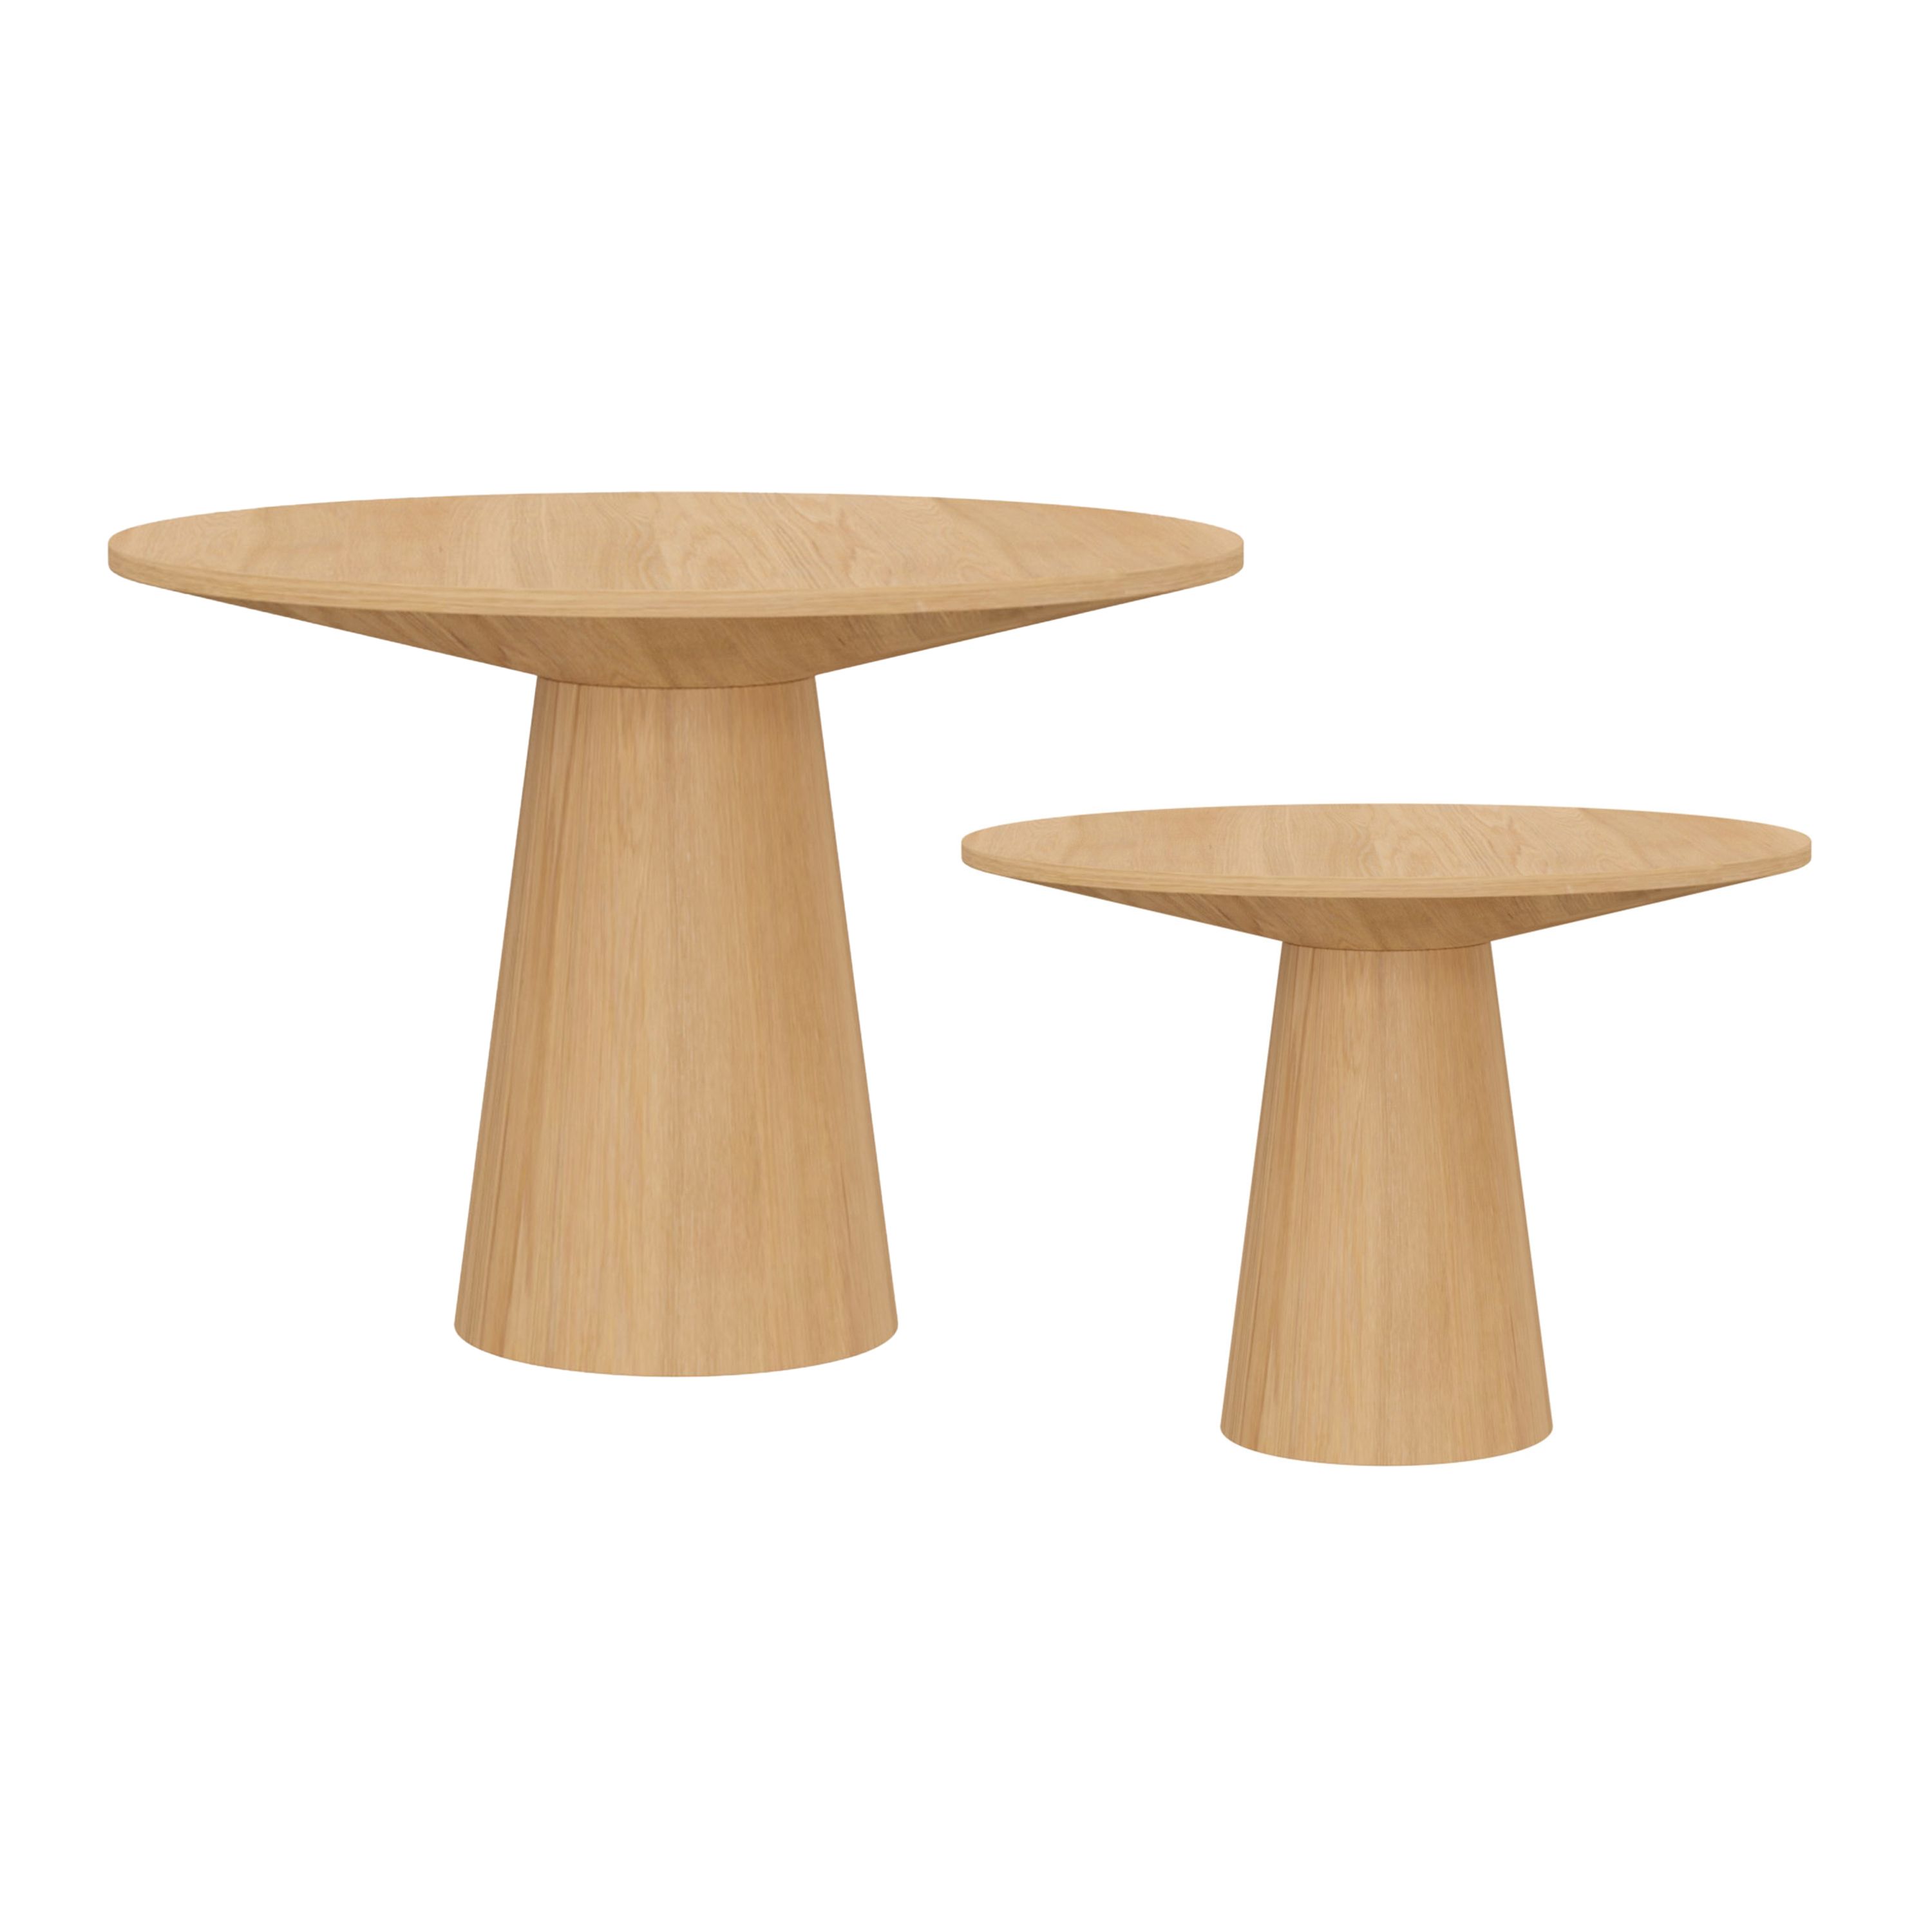 Solebay Round Wood Coffee Table | World Market